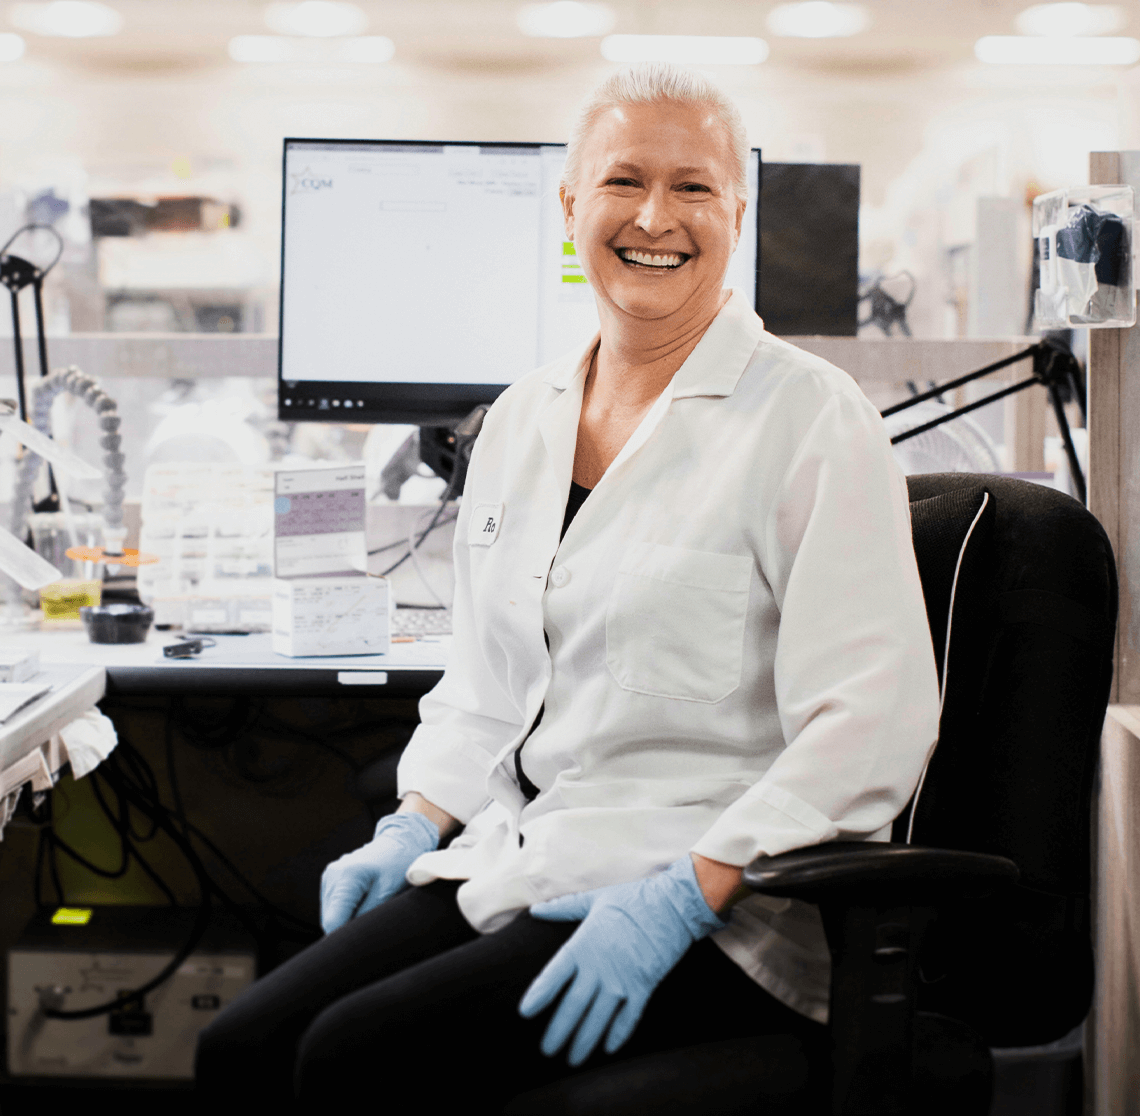 Woman hearing aid technician smiling